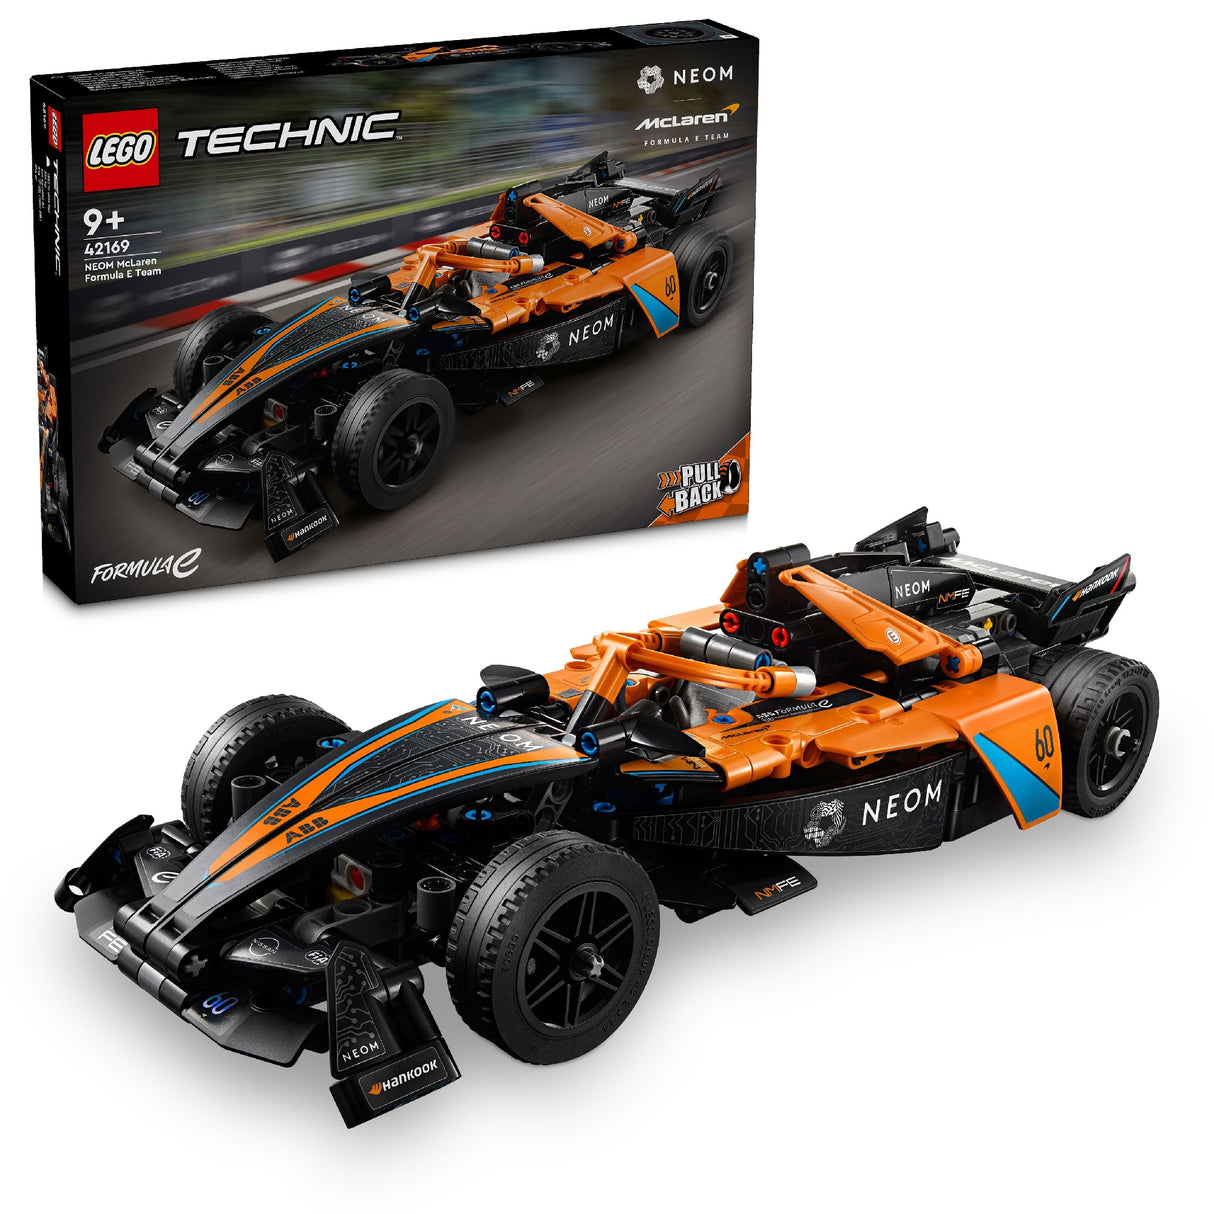 LEGO TECHNIC NEOM MCLAREN FORMULA E RACE CAR 42169 AGE: 9+